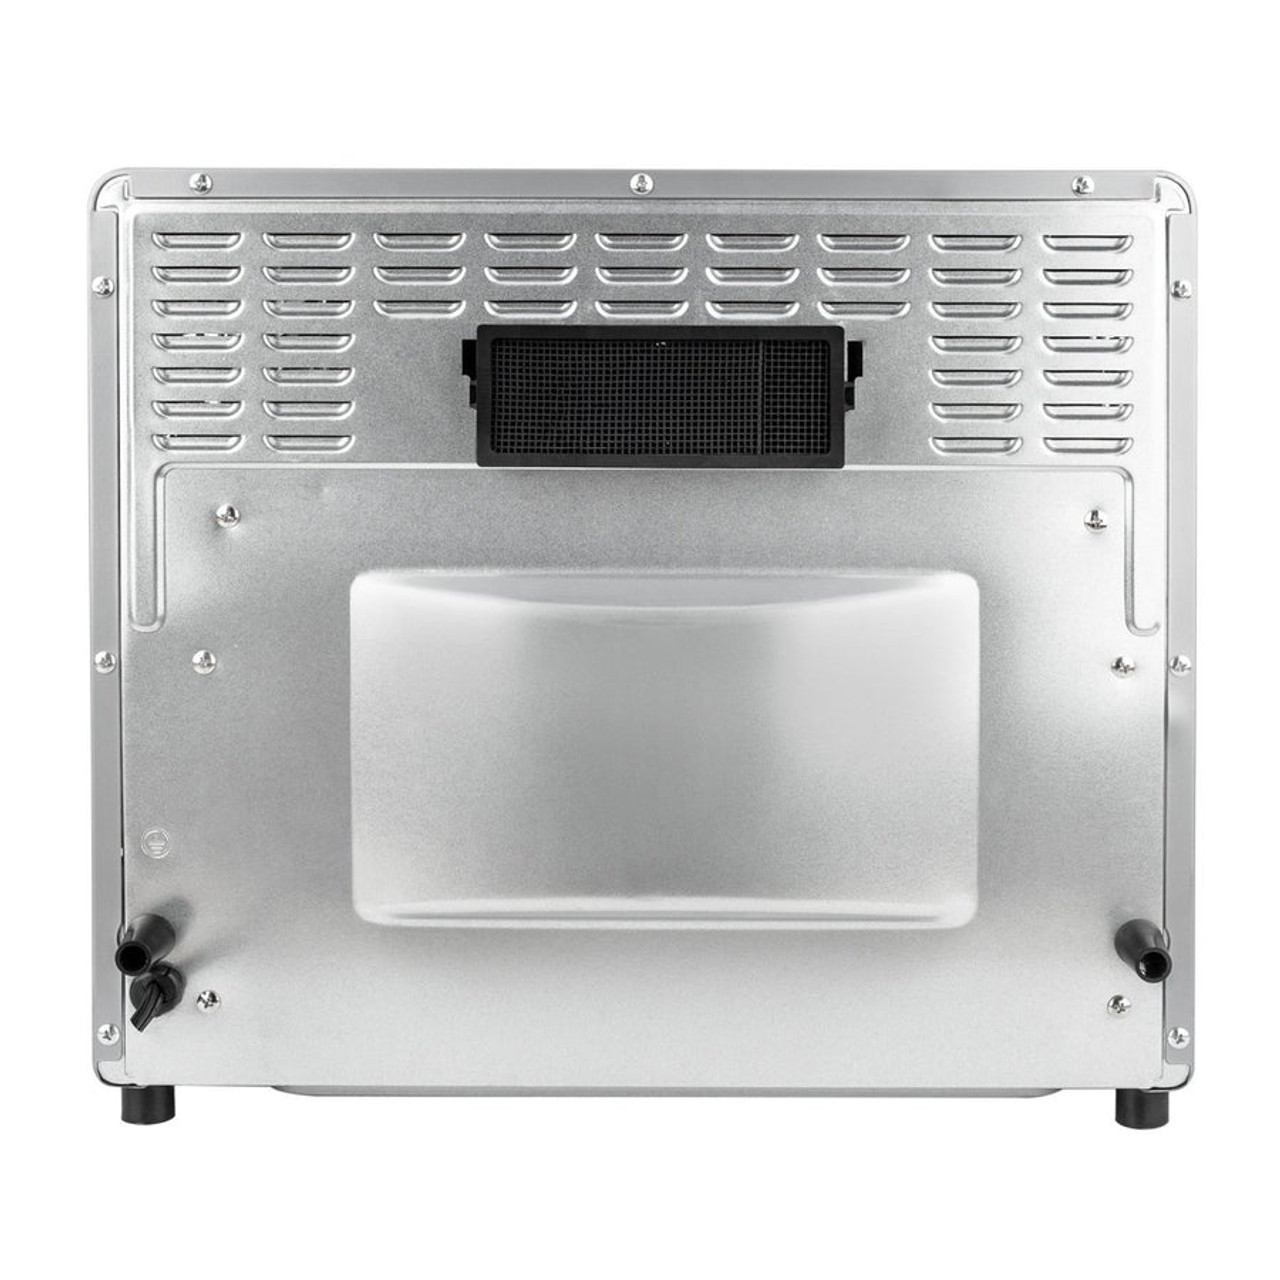 Kalorik MAXX® 7 Quart Digital Air Fryer, Black and Stainless Steel